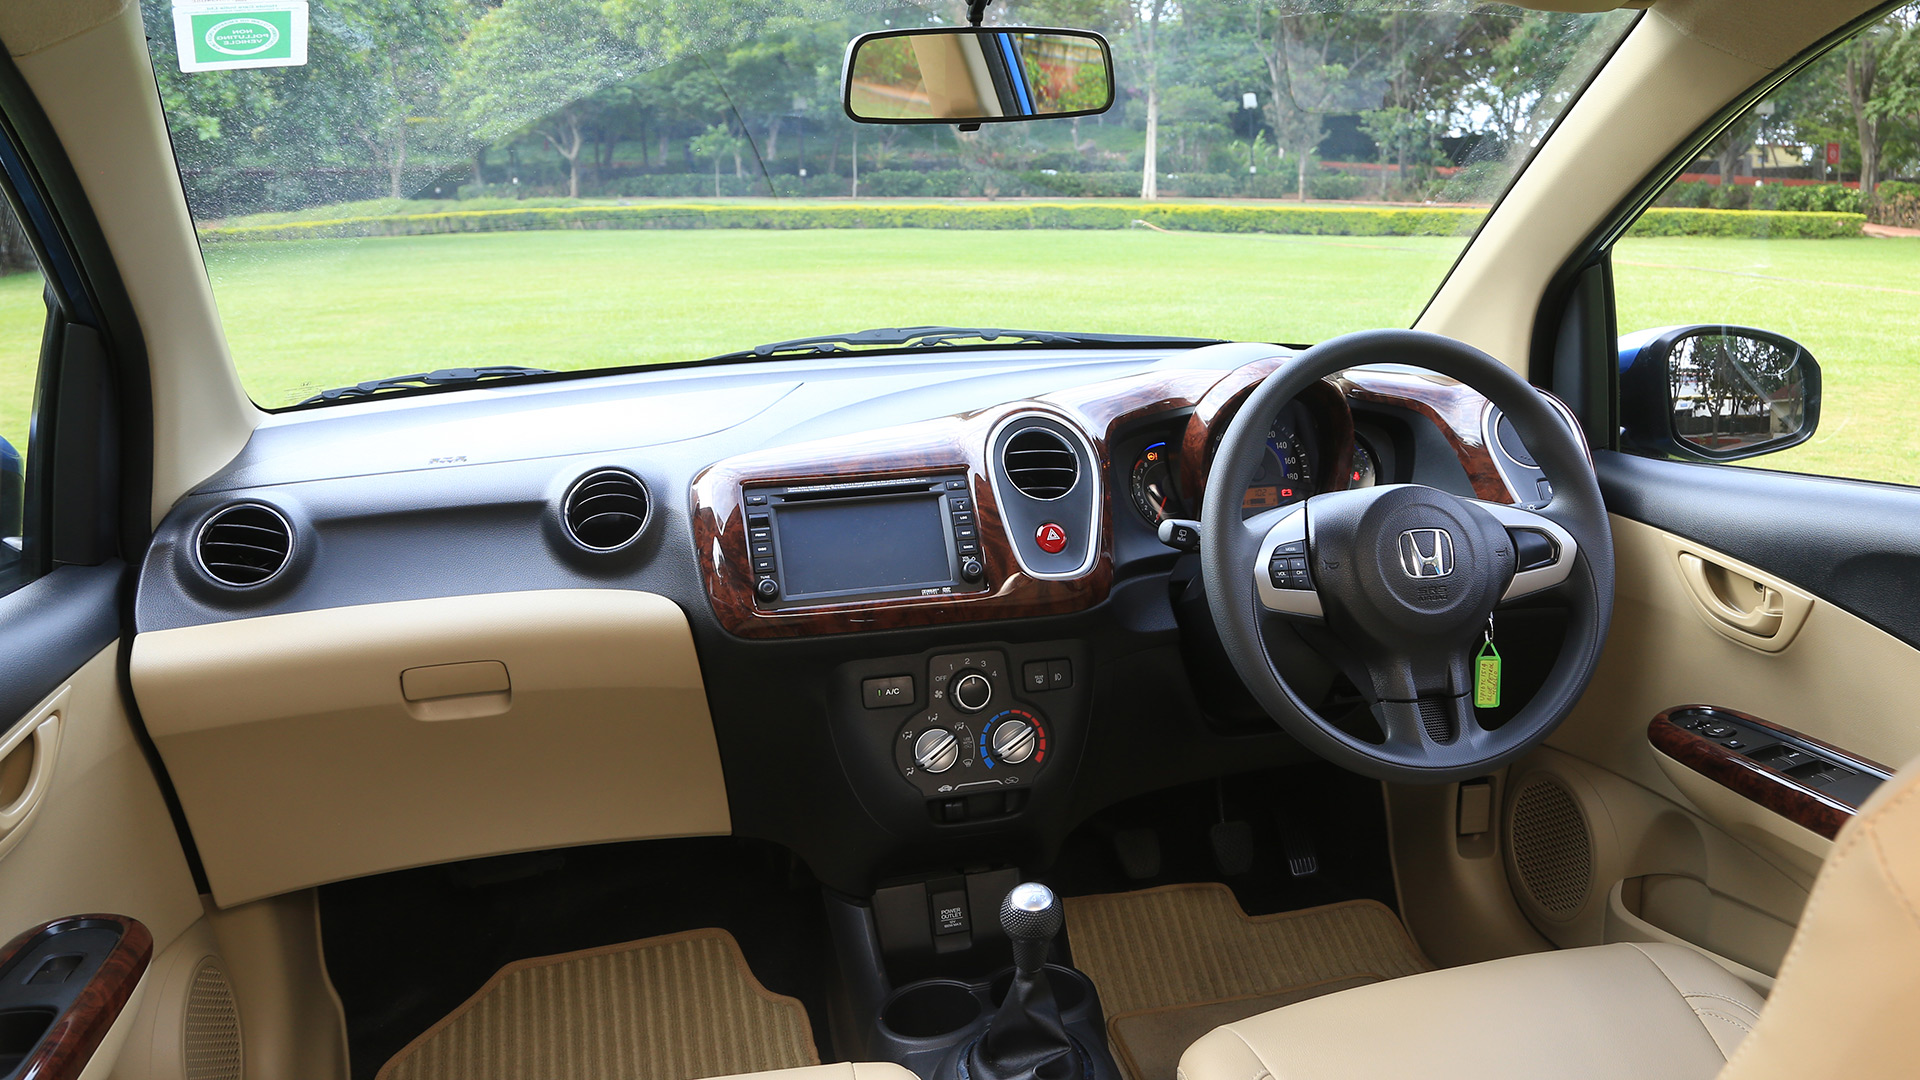 Honda-Mobilio-2014 Compare